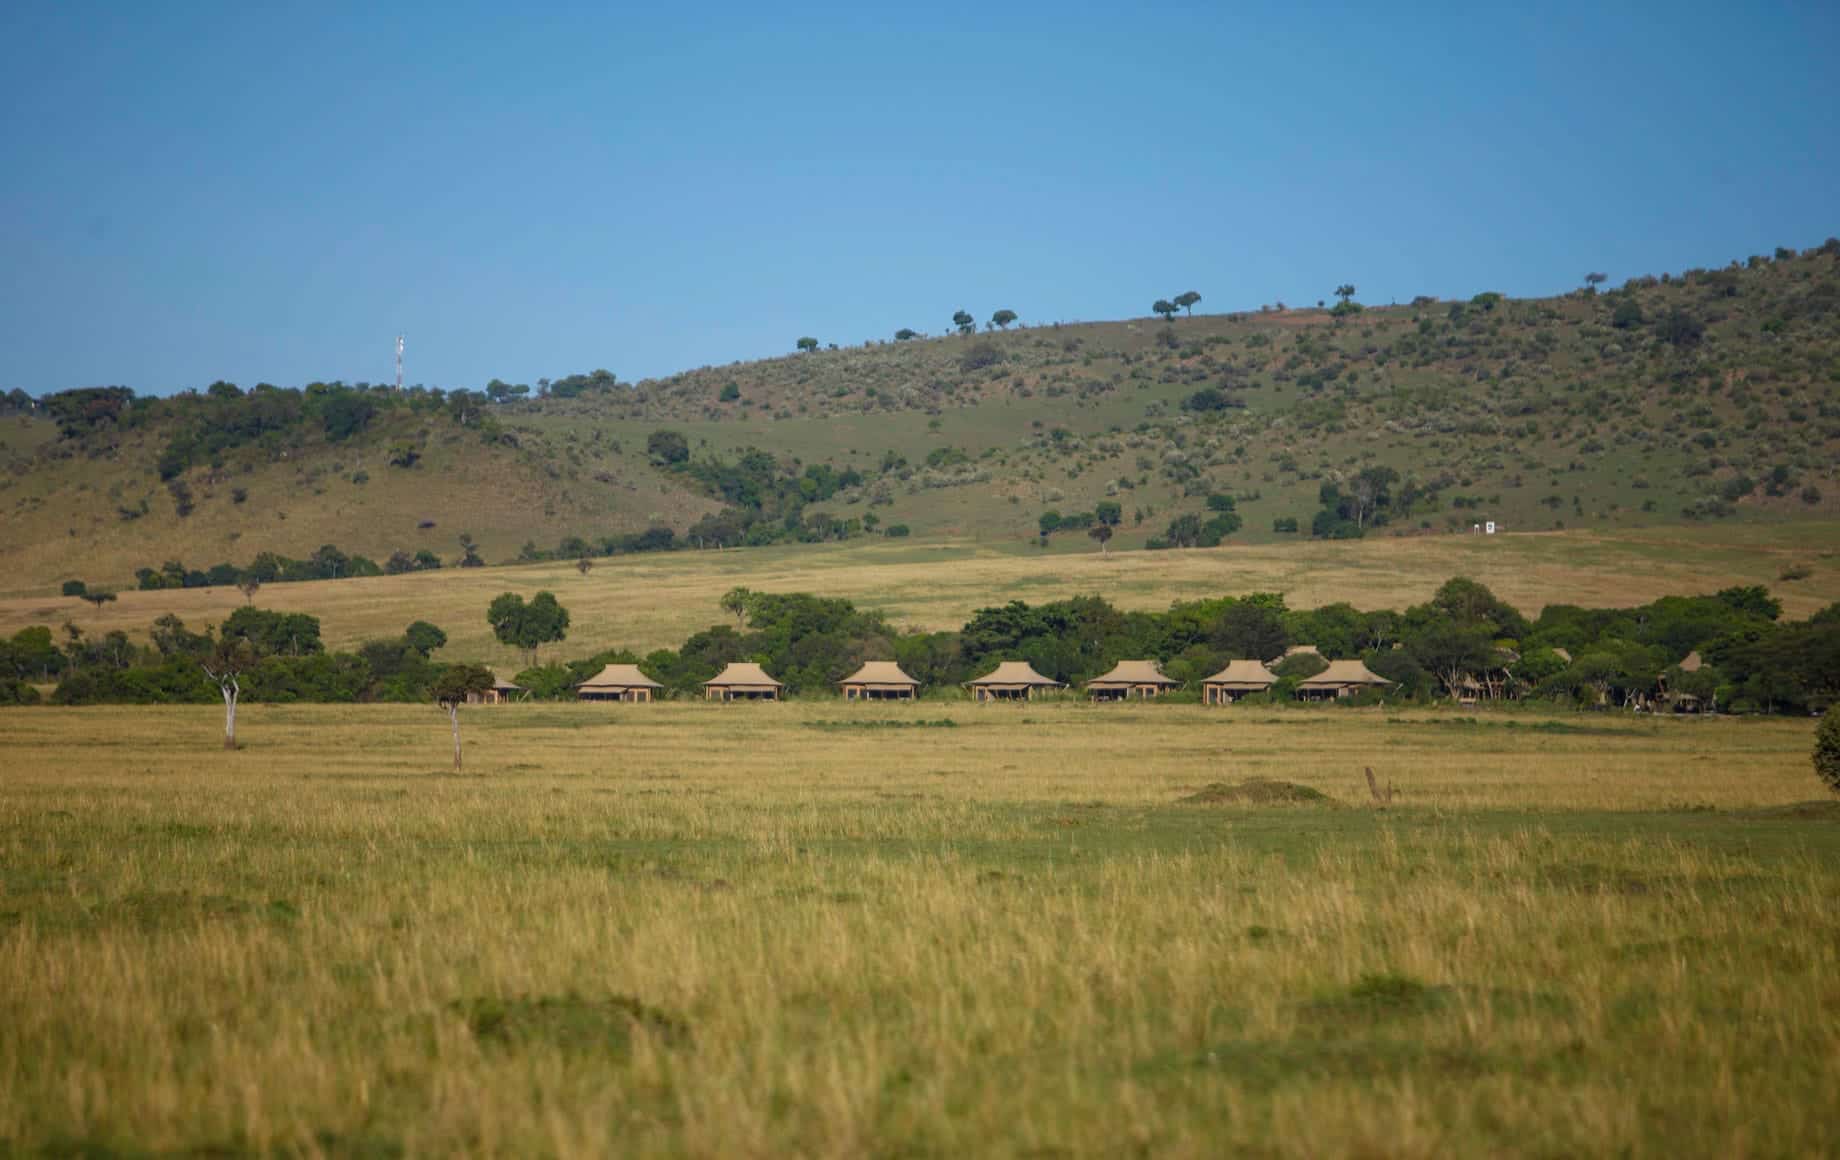 Beyond Kichwa Tembo Tented Camp